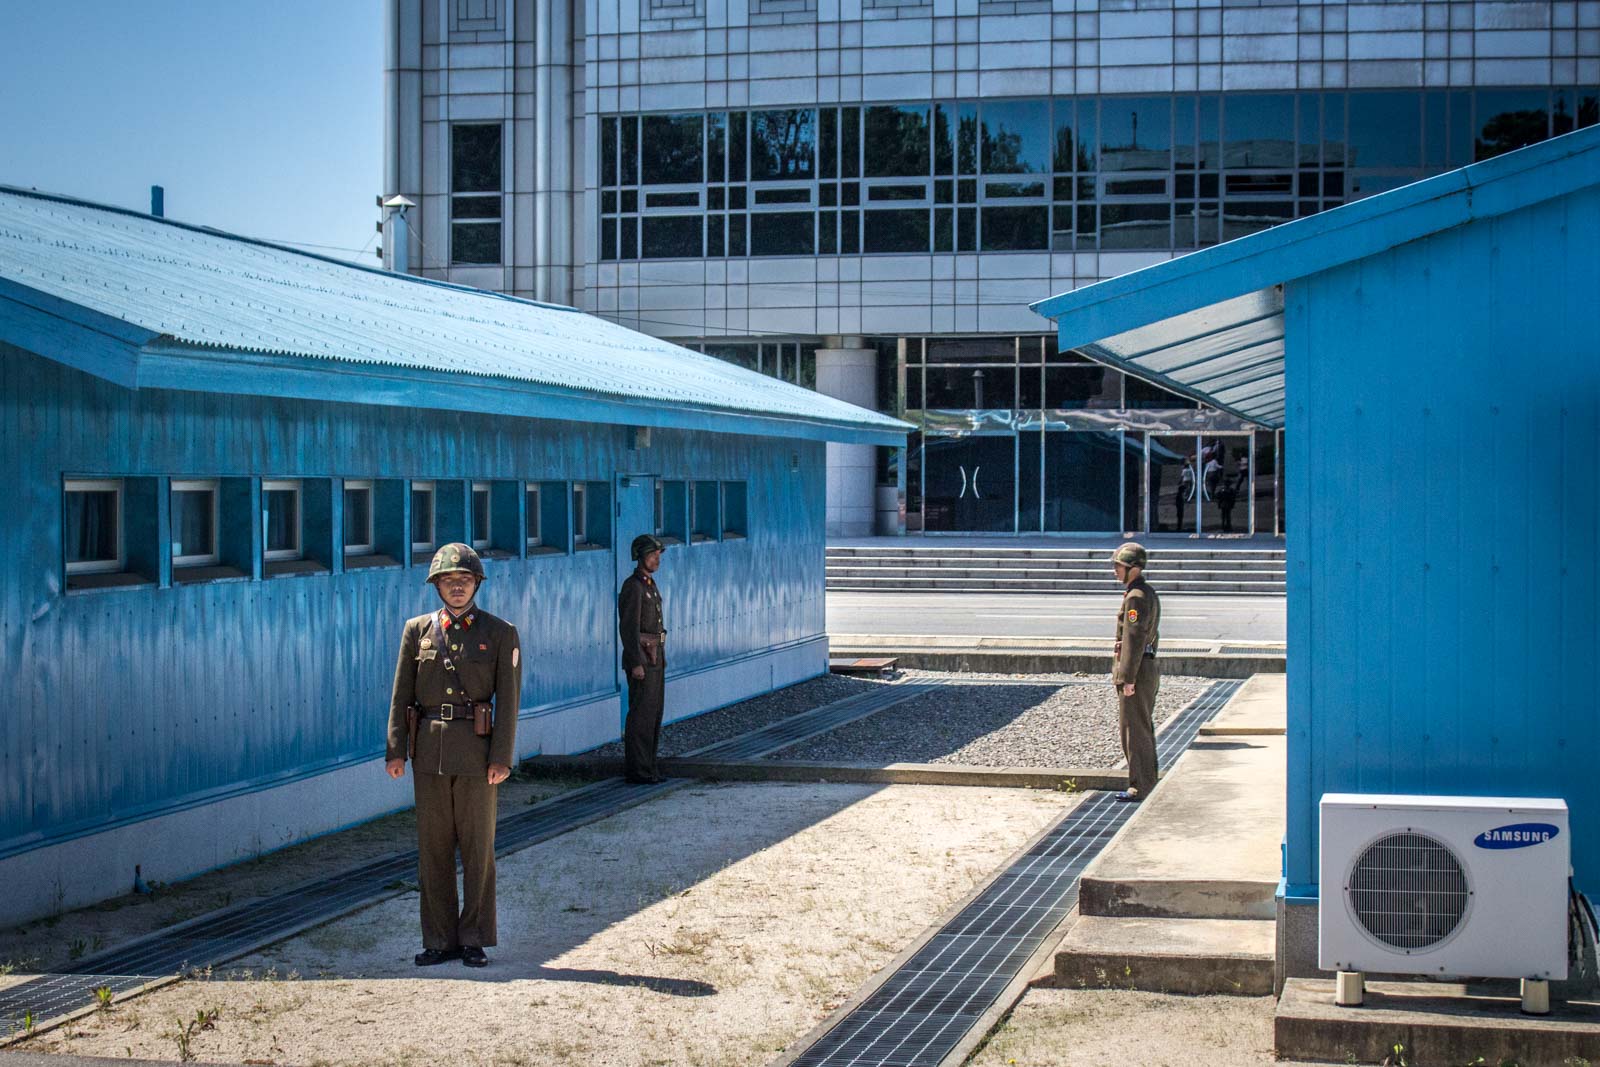 North Korean leaders and propaganda